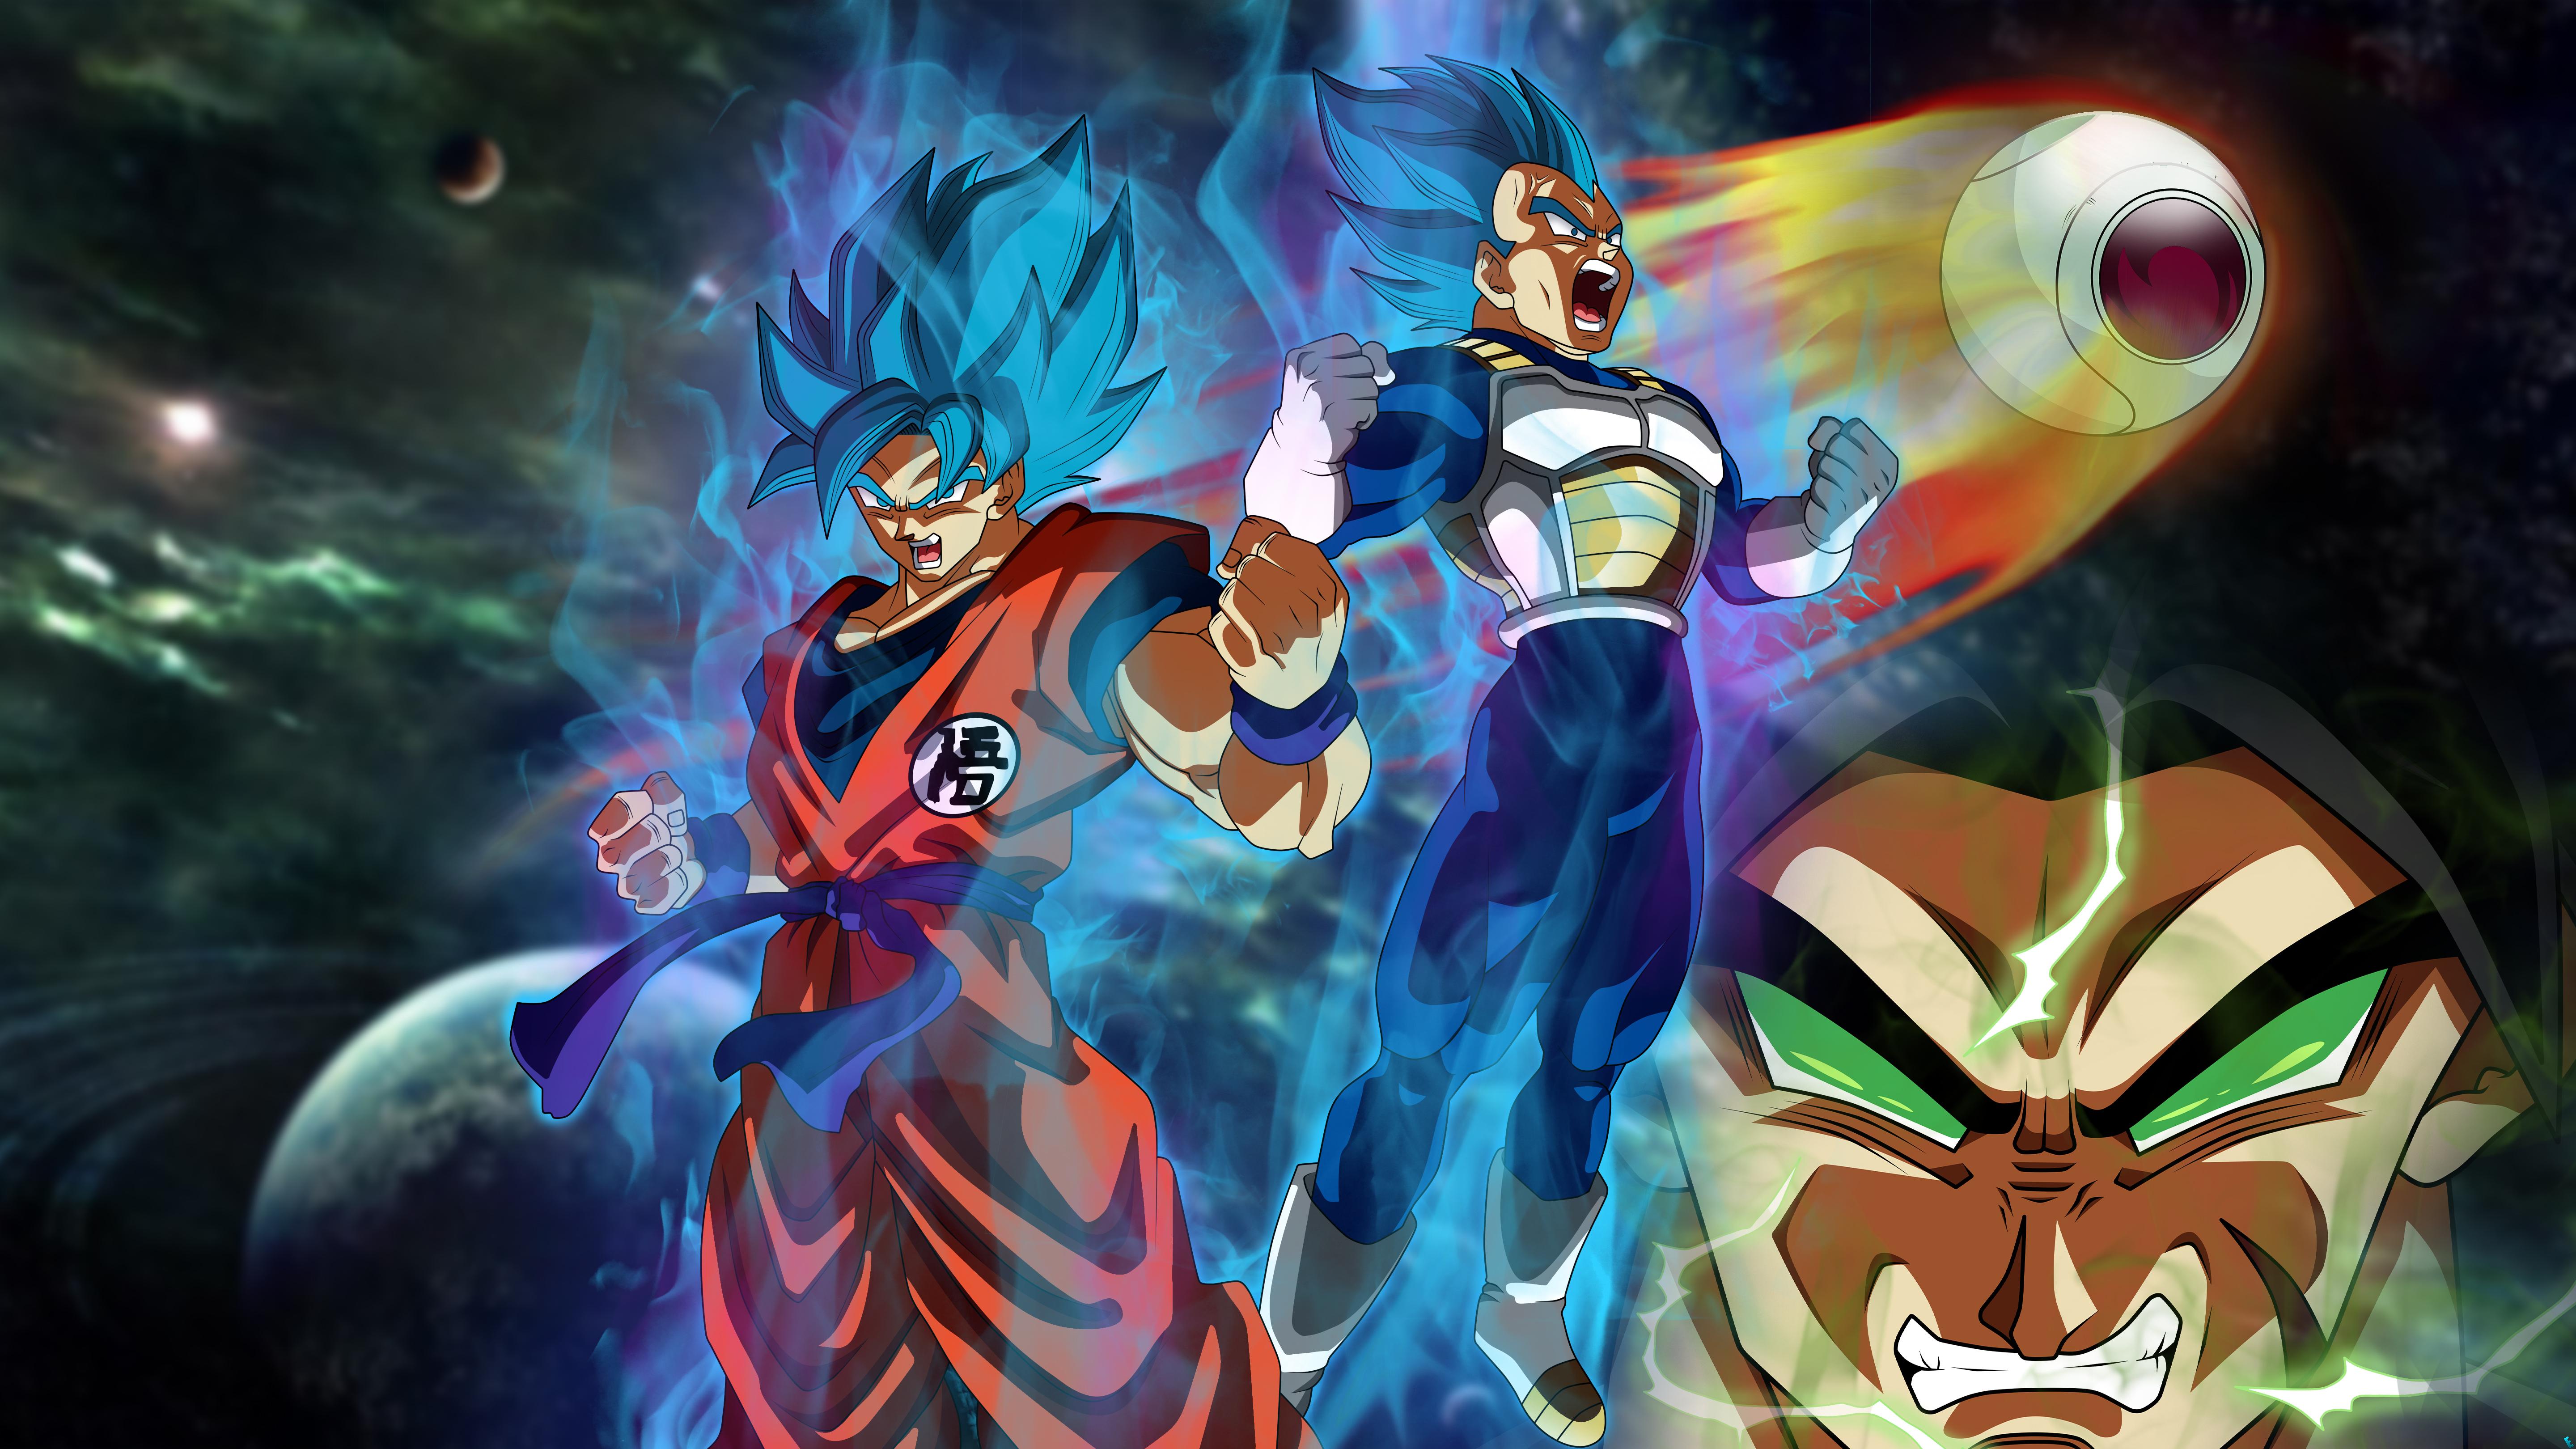 Goku Vegeta Dragon Ball Super 5k, HD Anime, 4k Wallpaper, Image, Background, Photo and Picture